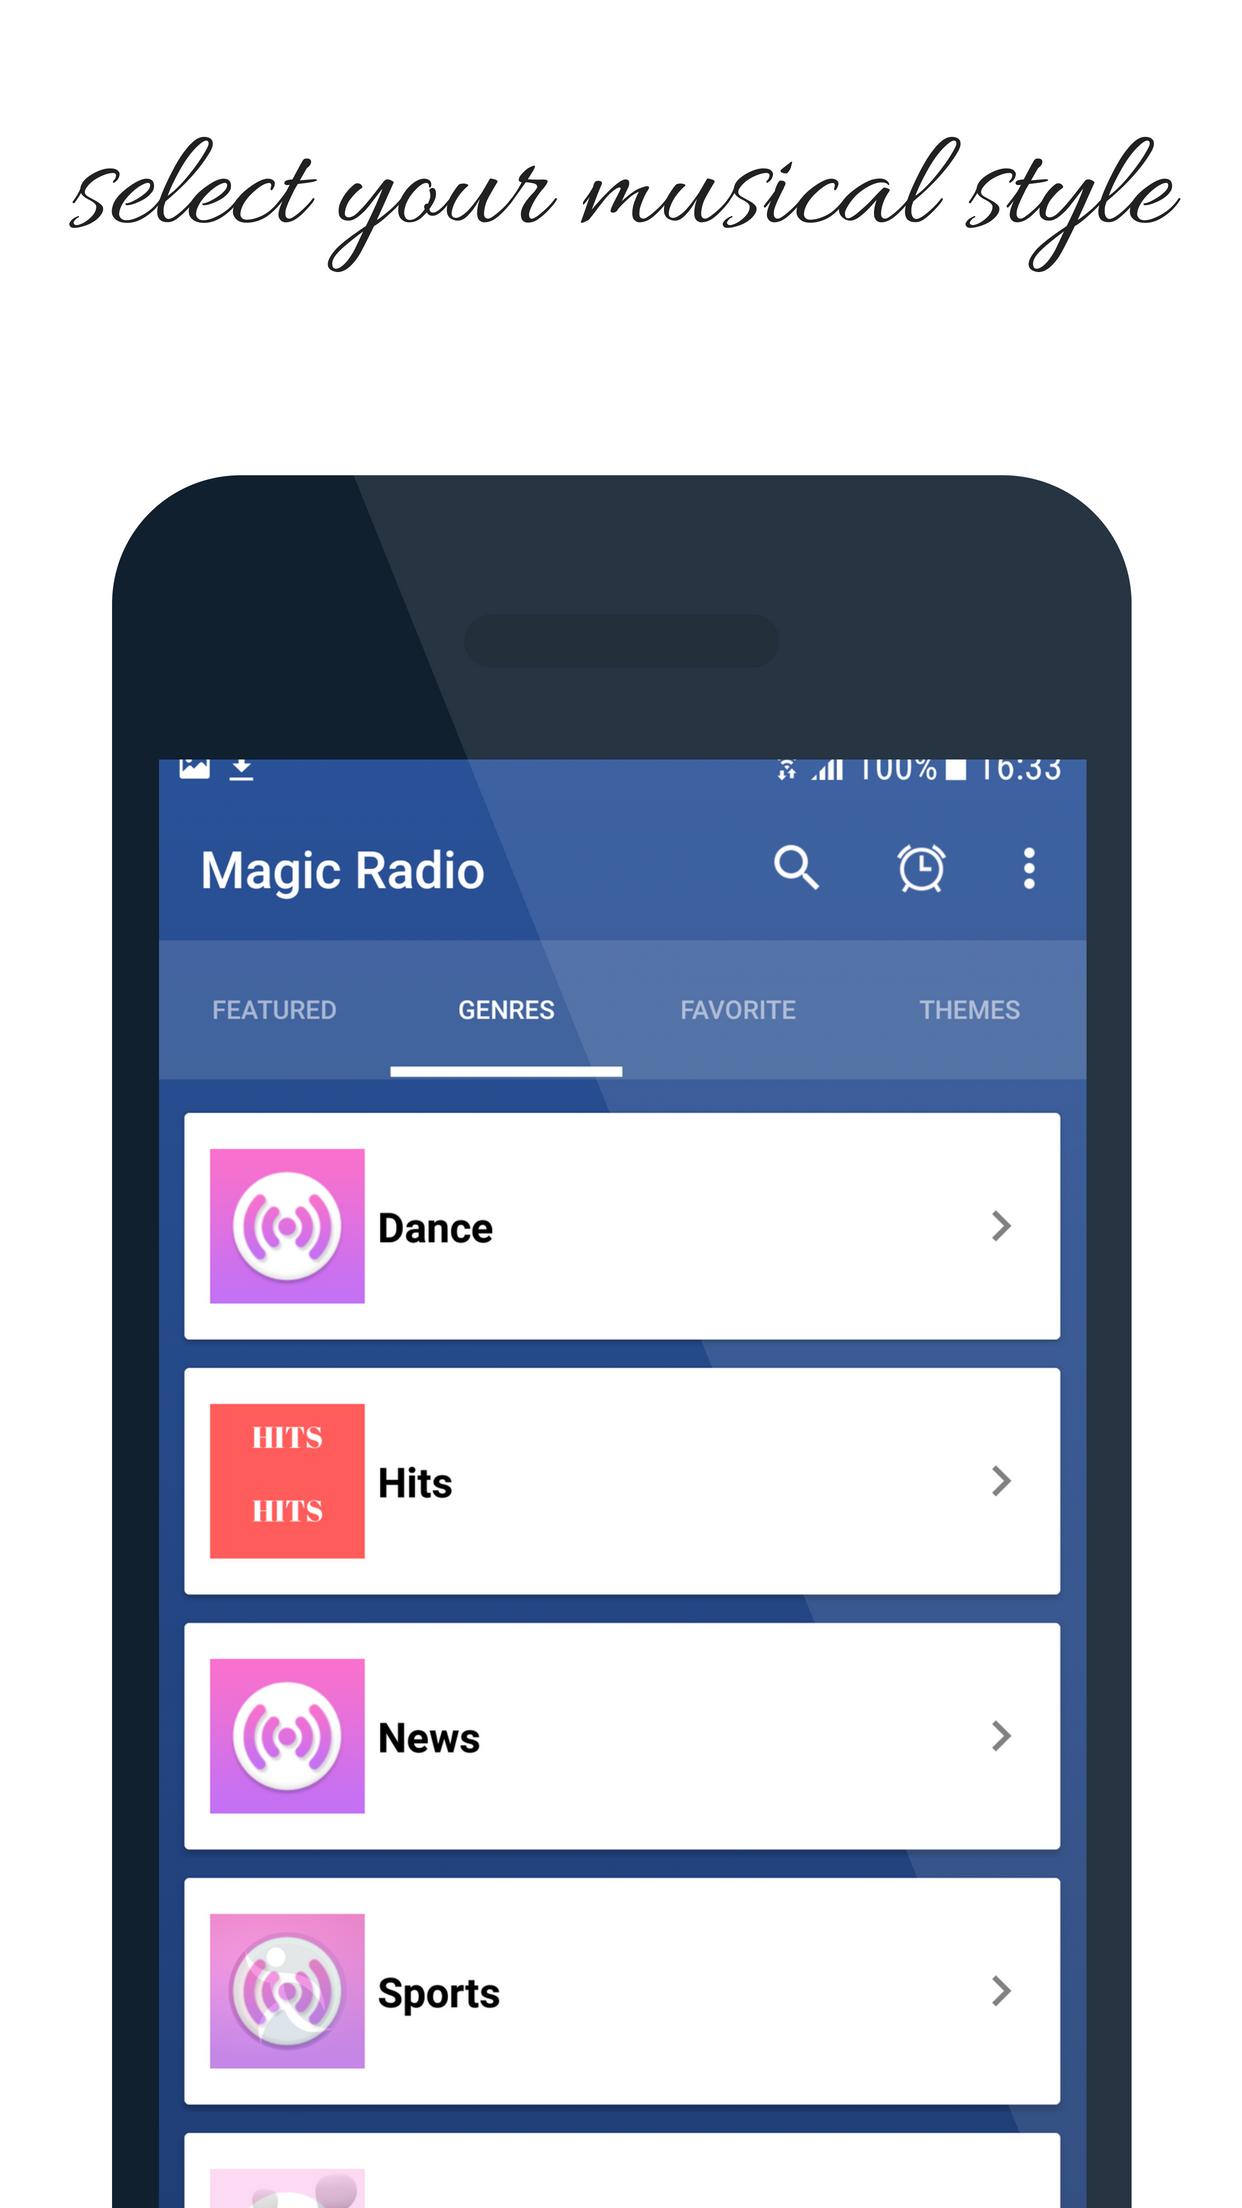 Magic Radio 105.4 FM App Station London UK APK for Android Download